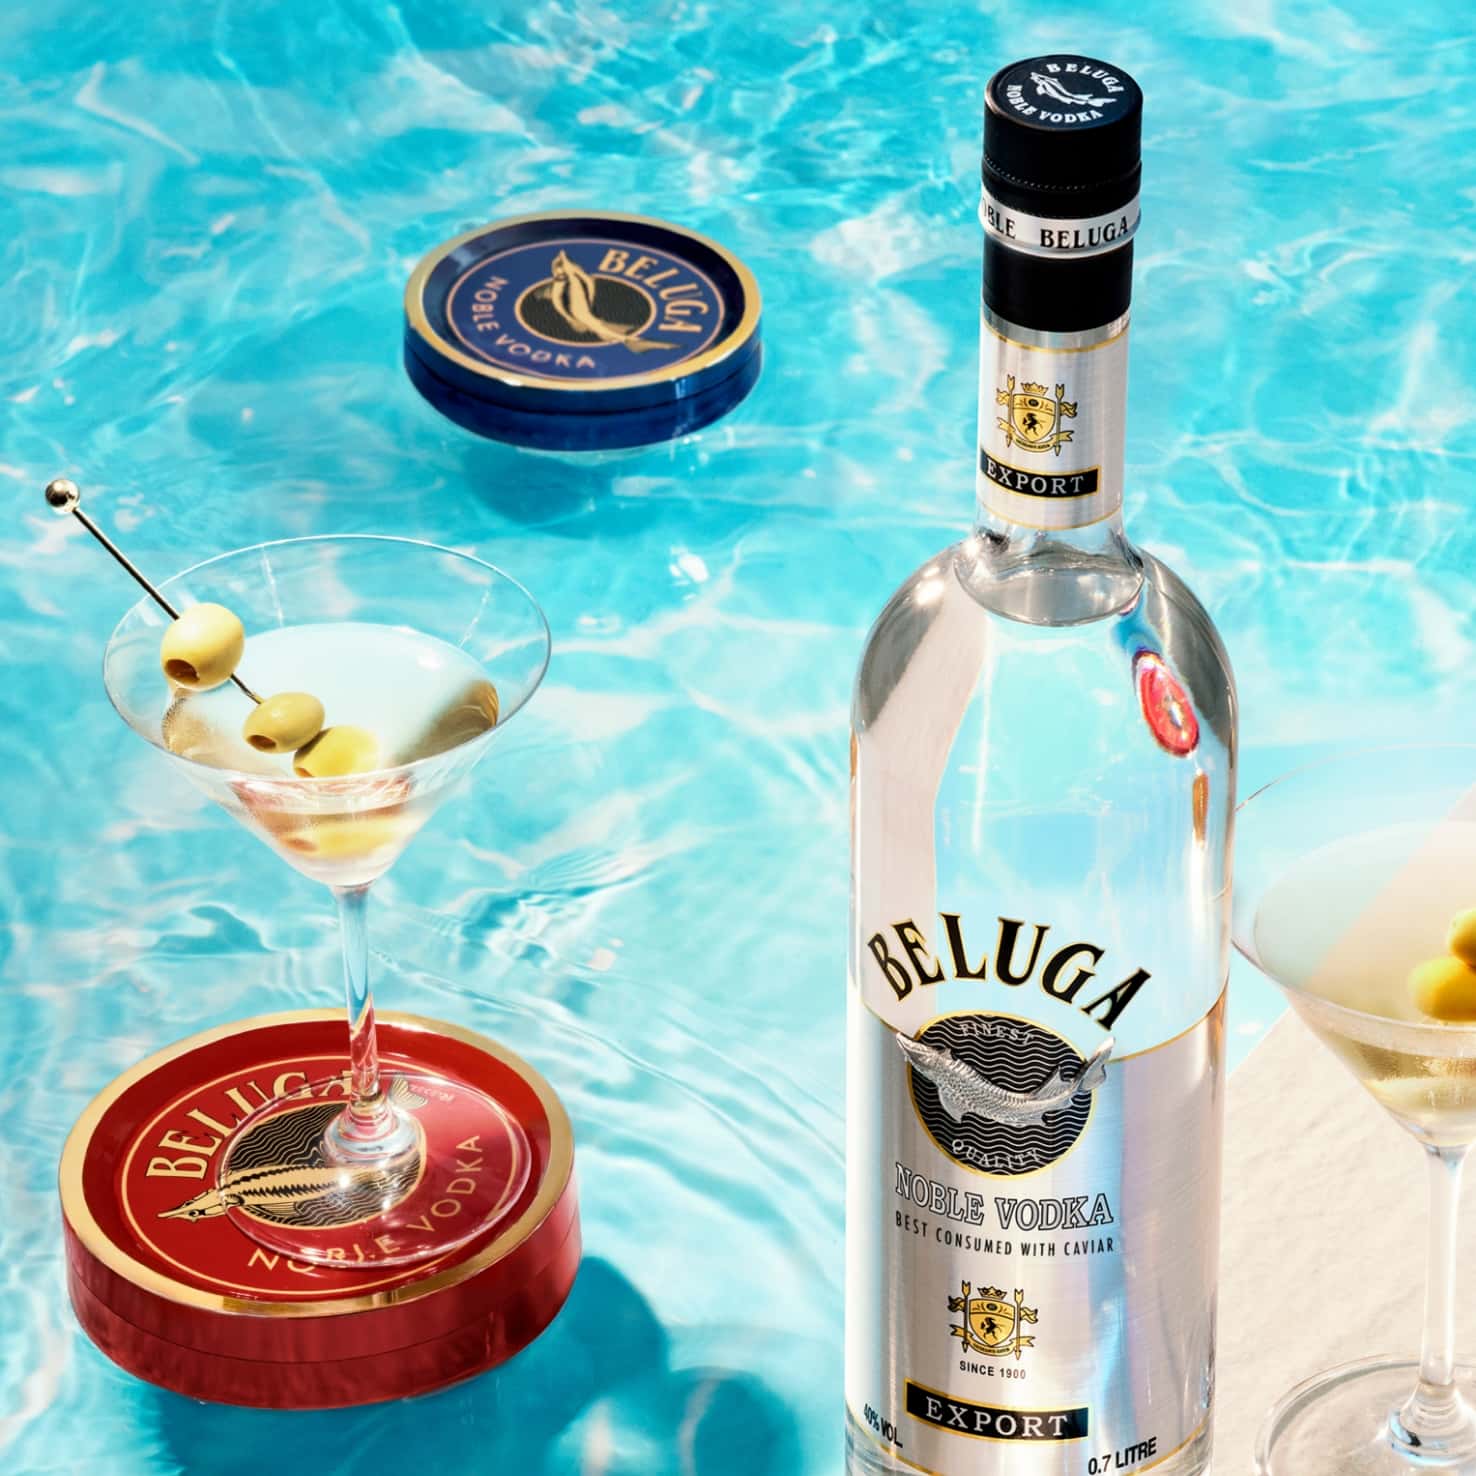 The Beluga Noble Vodka photography